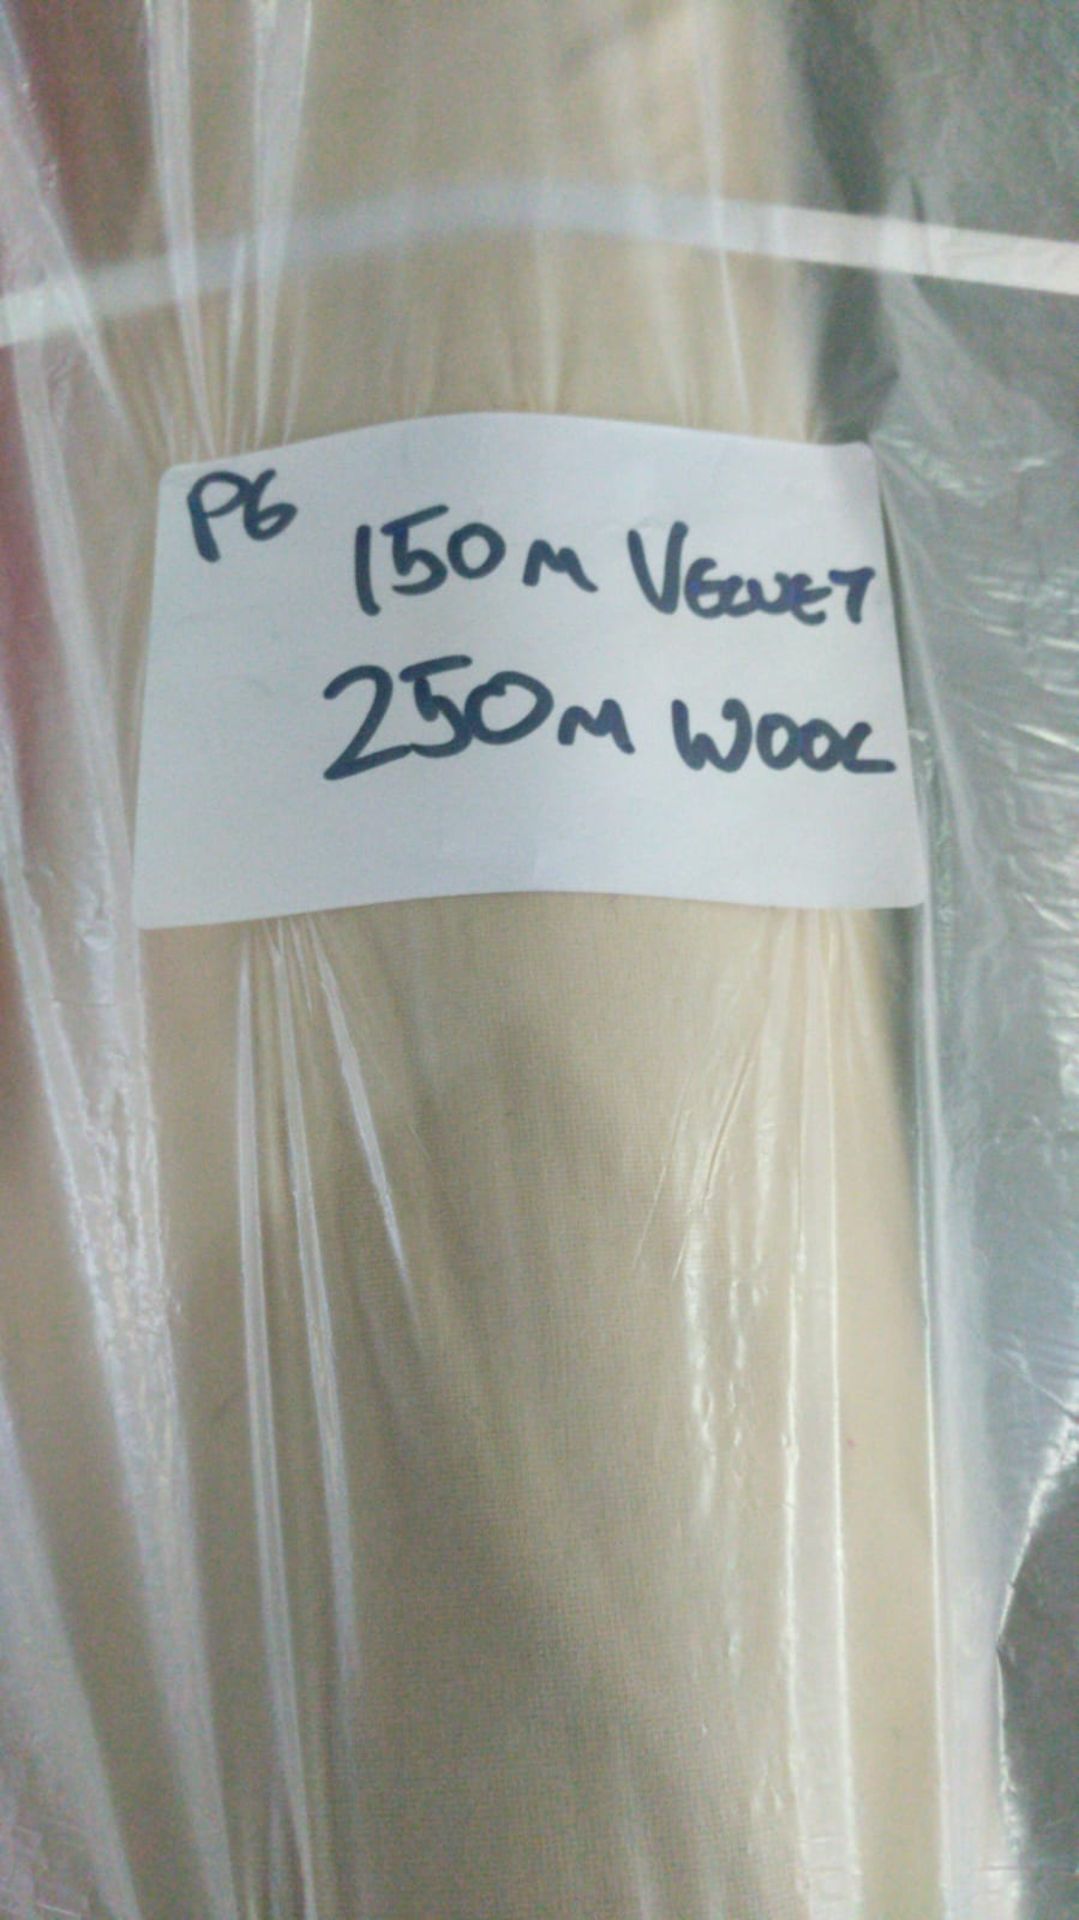 1 x Pallet of Assorted Swoon Easy Velvet - Appx 170 Metres & Appx 250 Metres Wool - Image 3 of 3